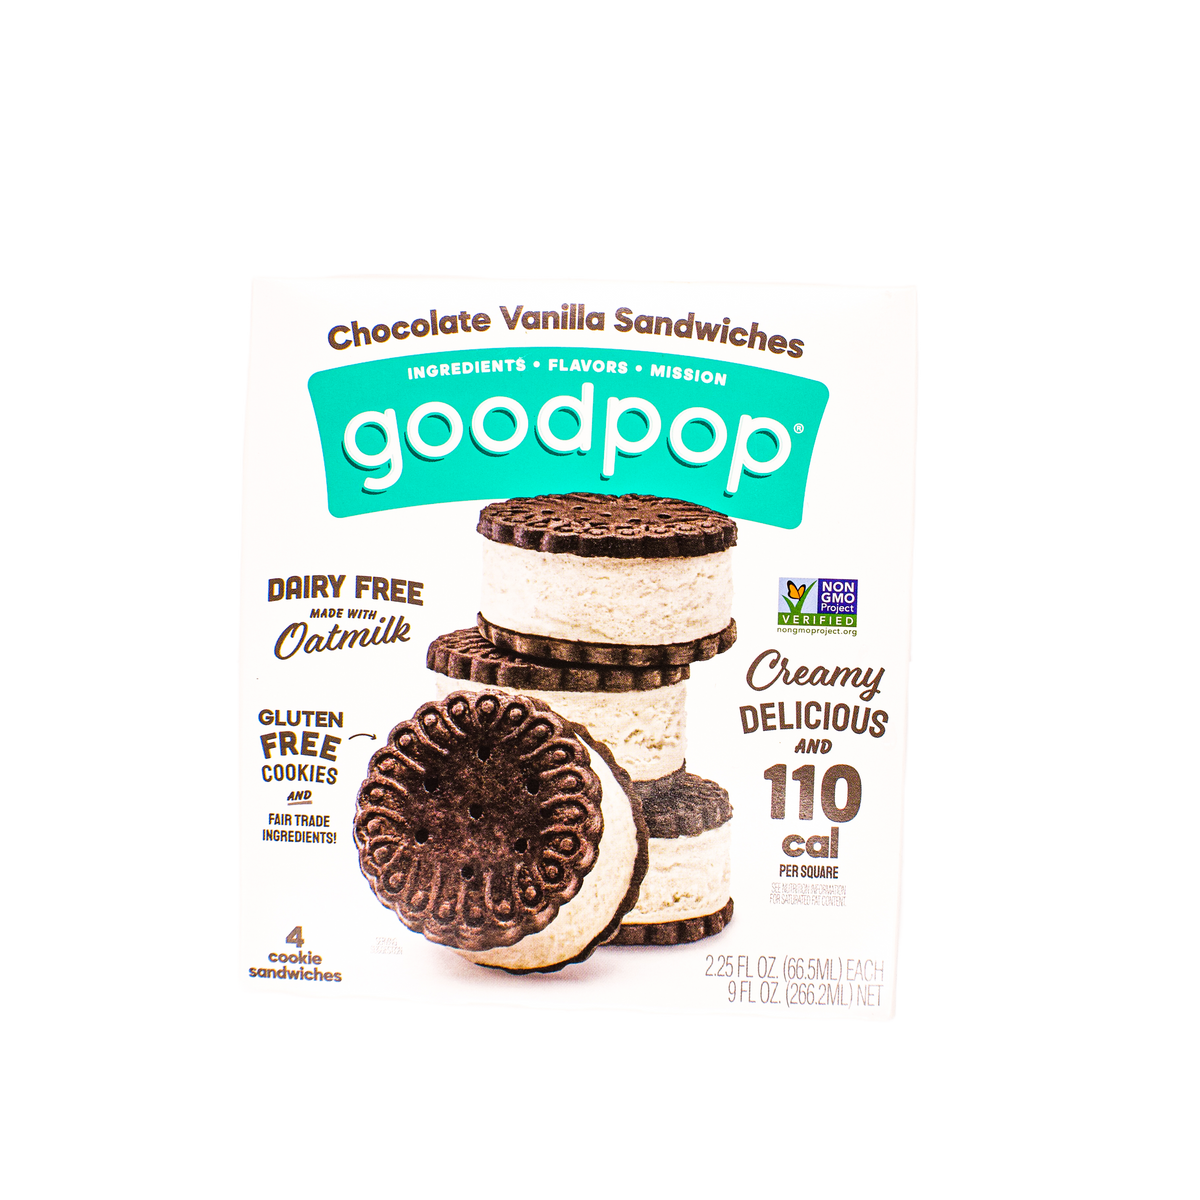 Goodpop Ice Cream Sandwich